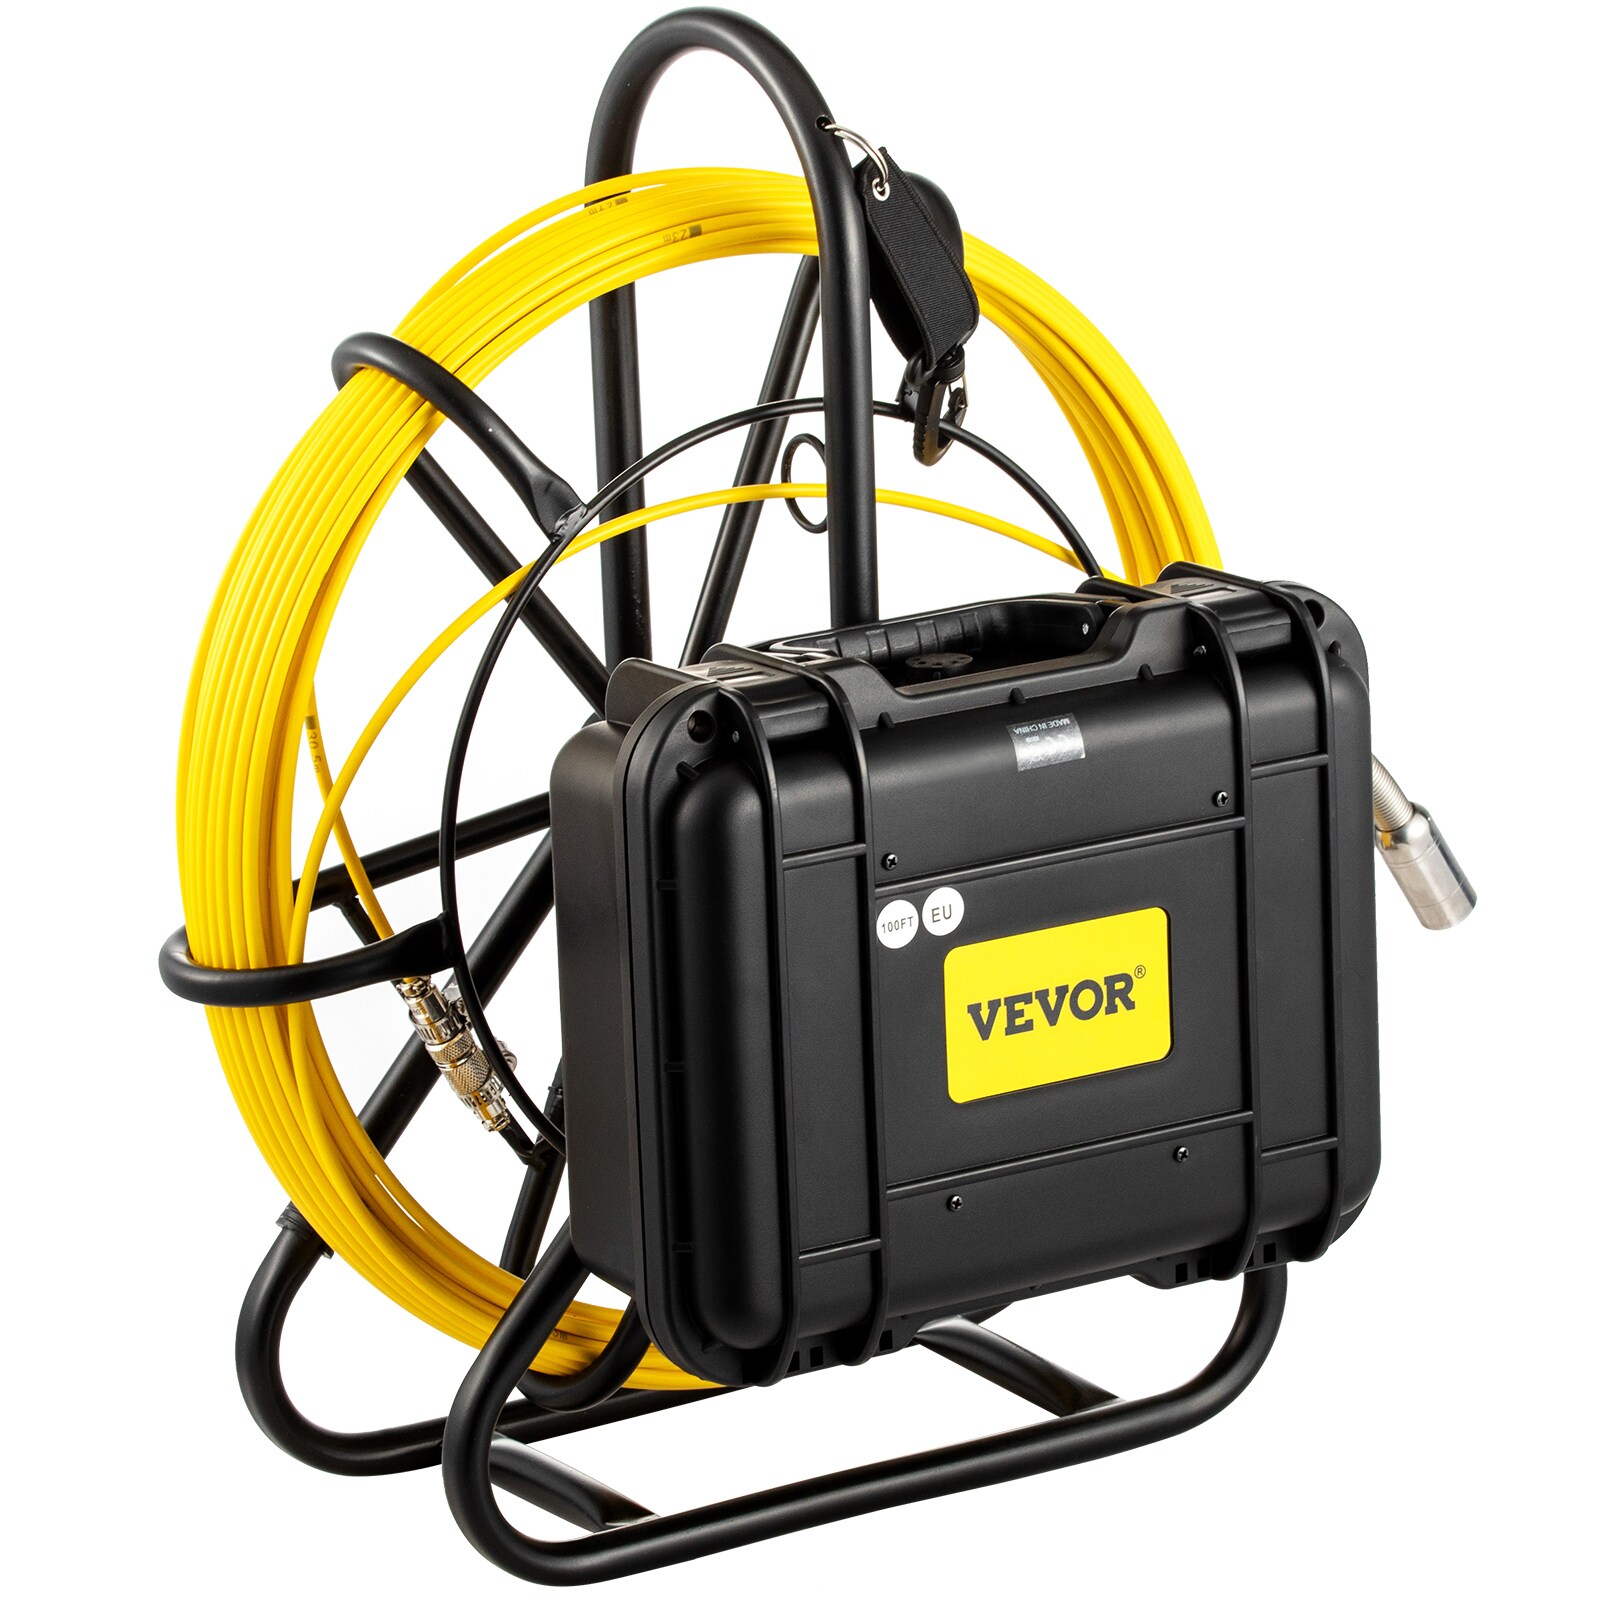 VEVOR VEVOR 30M Sewer Inspection Video Camera 7” Monitor Pipeline  Inspection Camera Drain Camera Industrial Endoscope HD DVR Recorder with  8GB Card